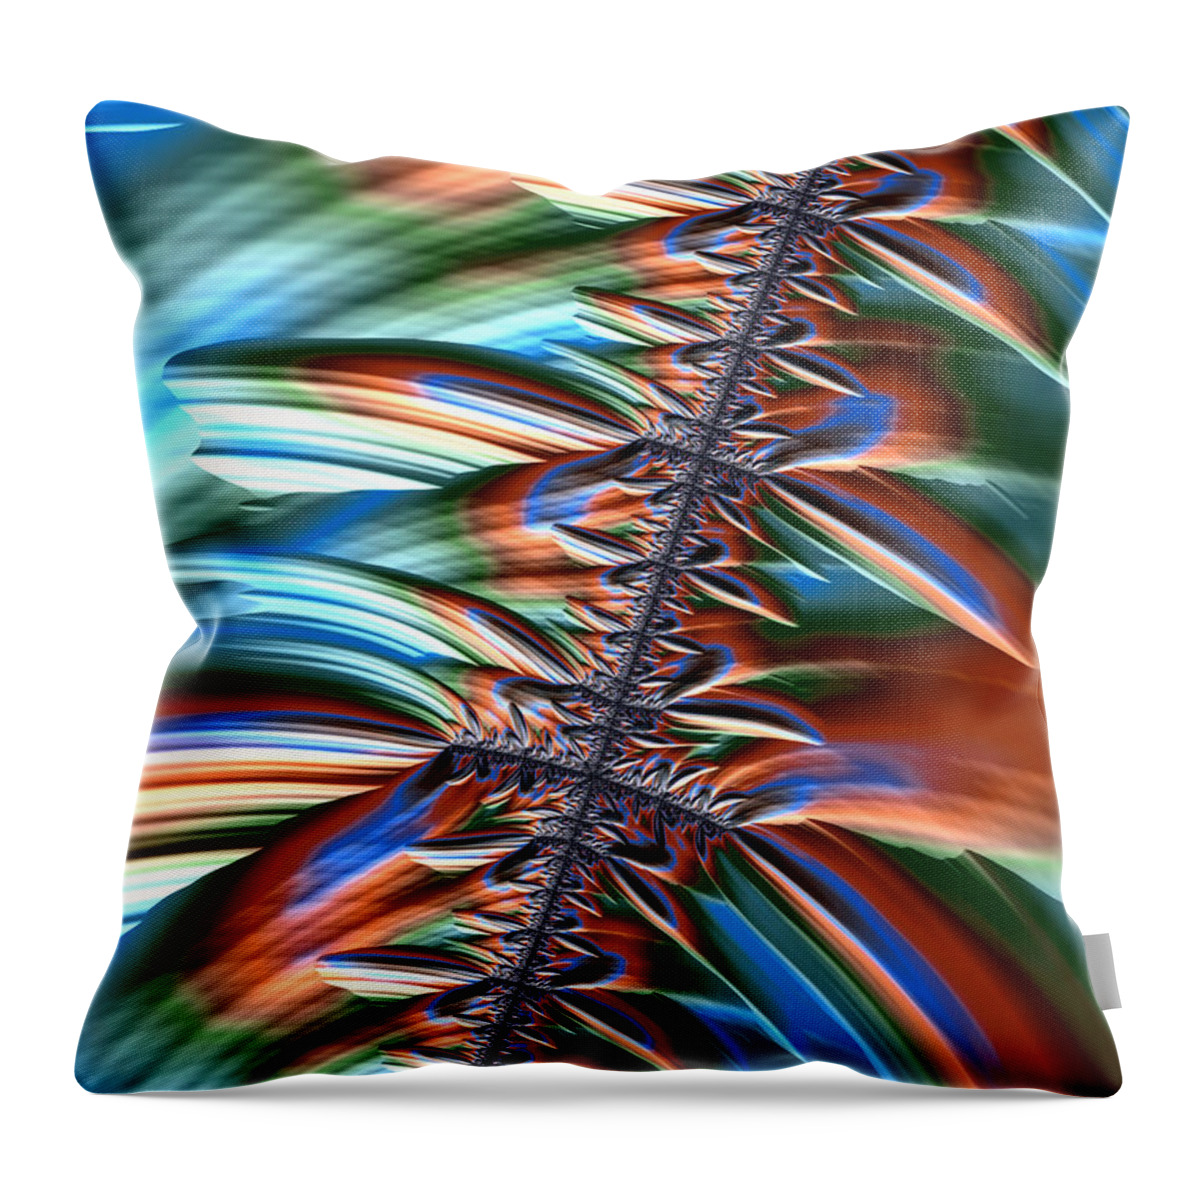 Fractal Art Throw Pillow featuring the digital art Waterfall Fractal 2 by Bonnie Bruno